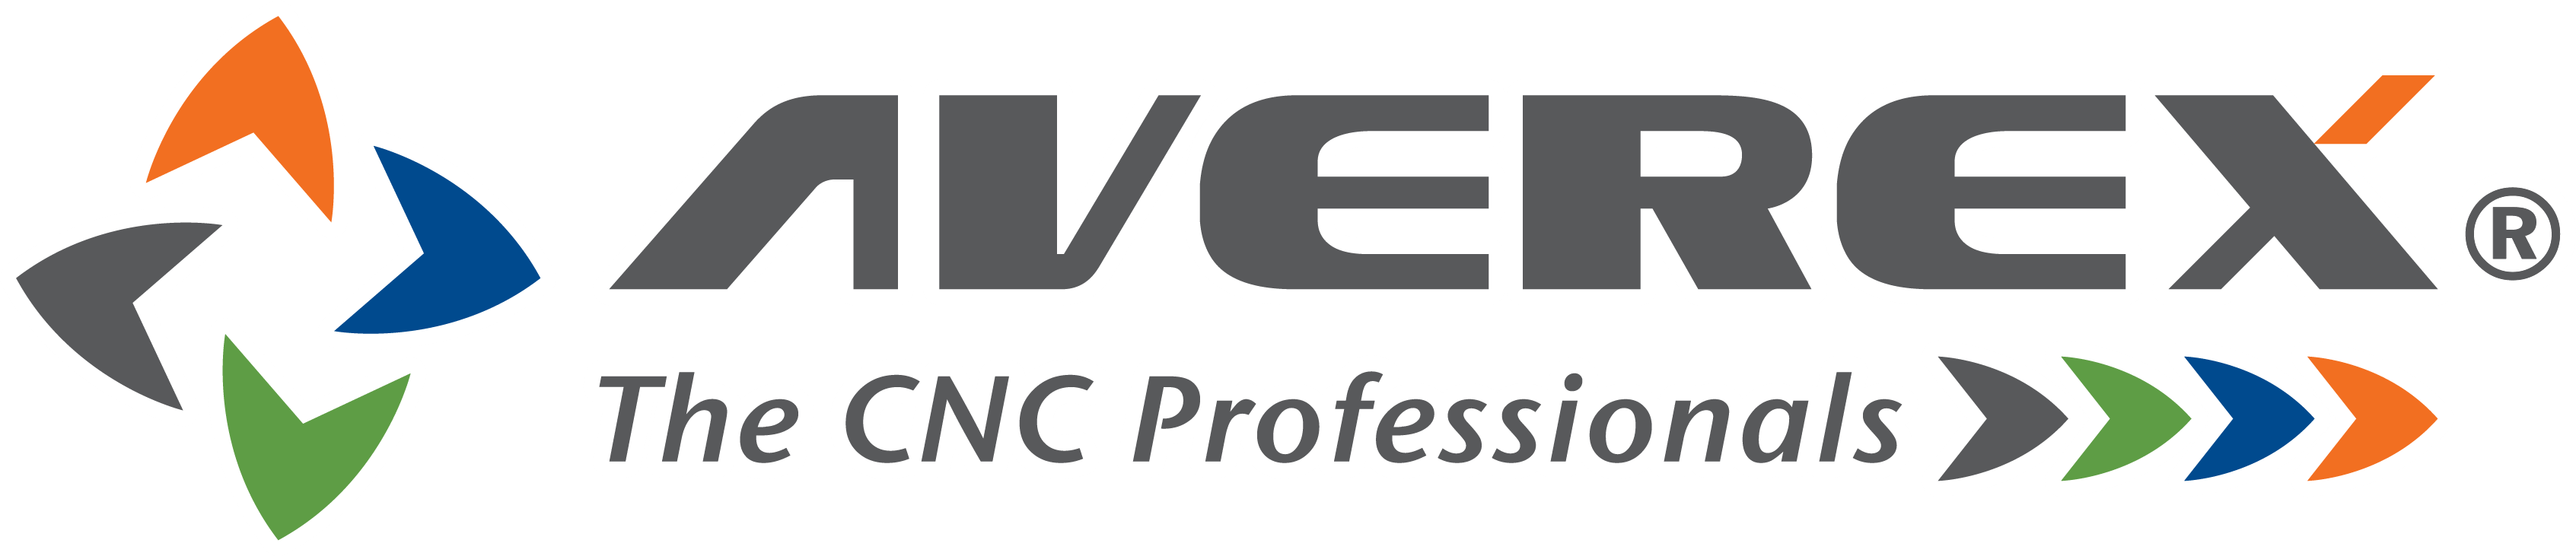 AVEREX (The CNC Professionals)